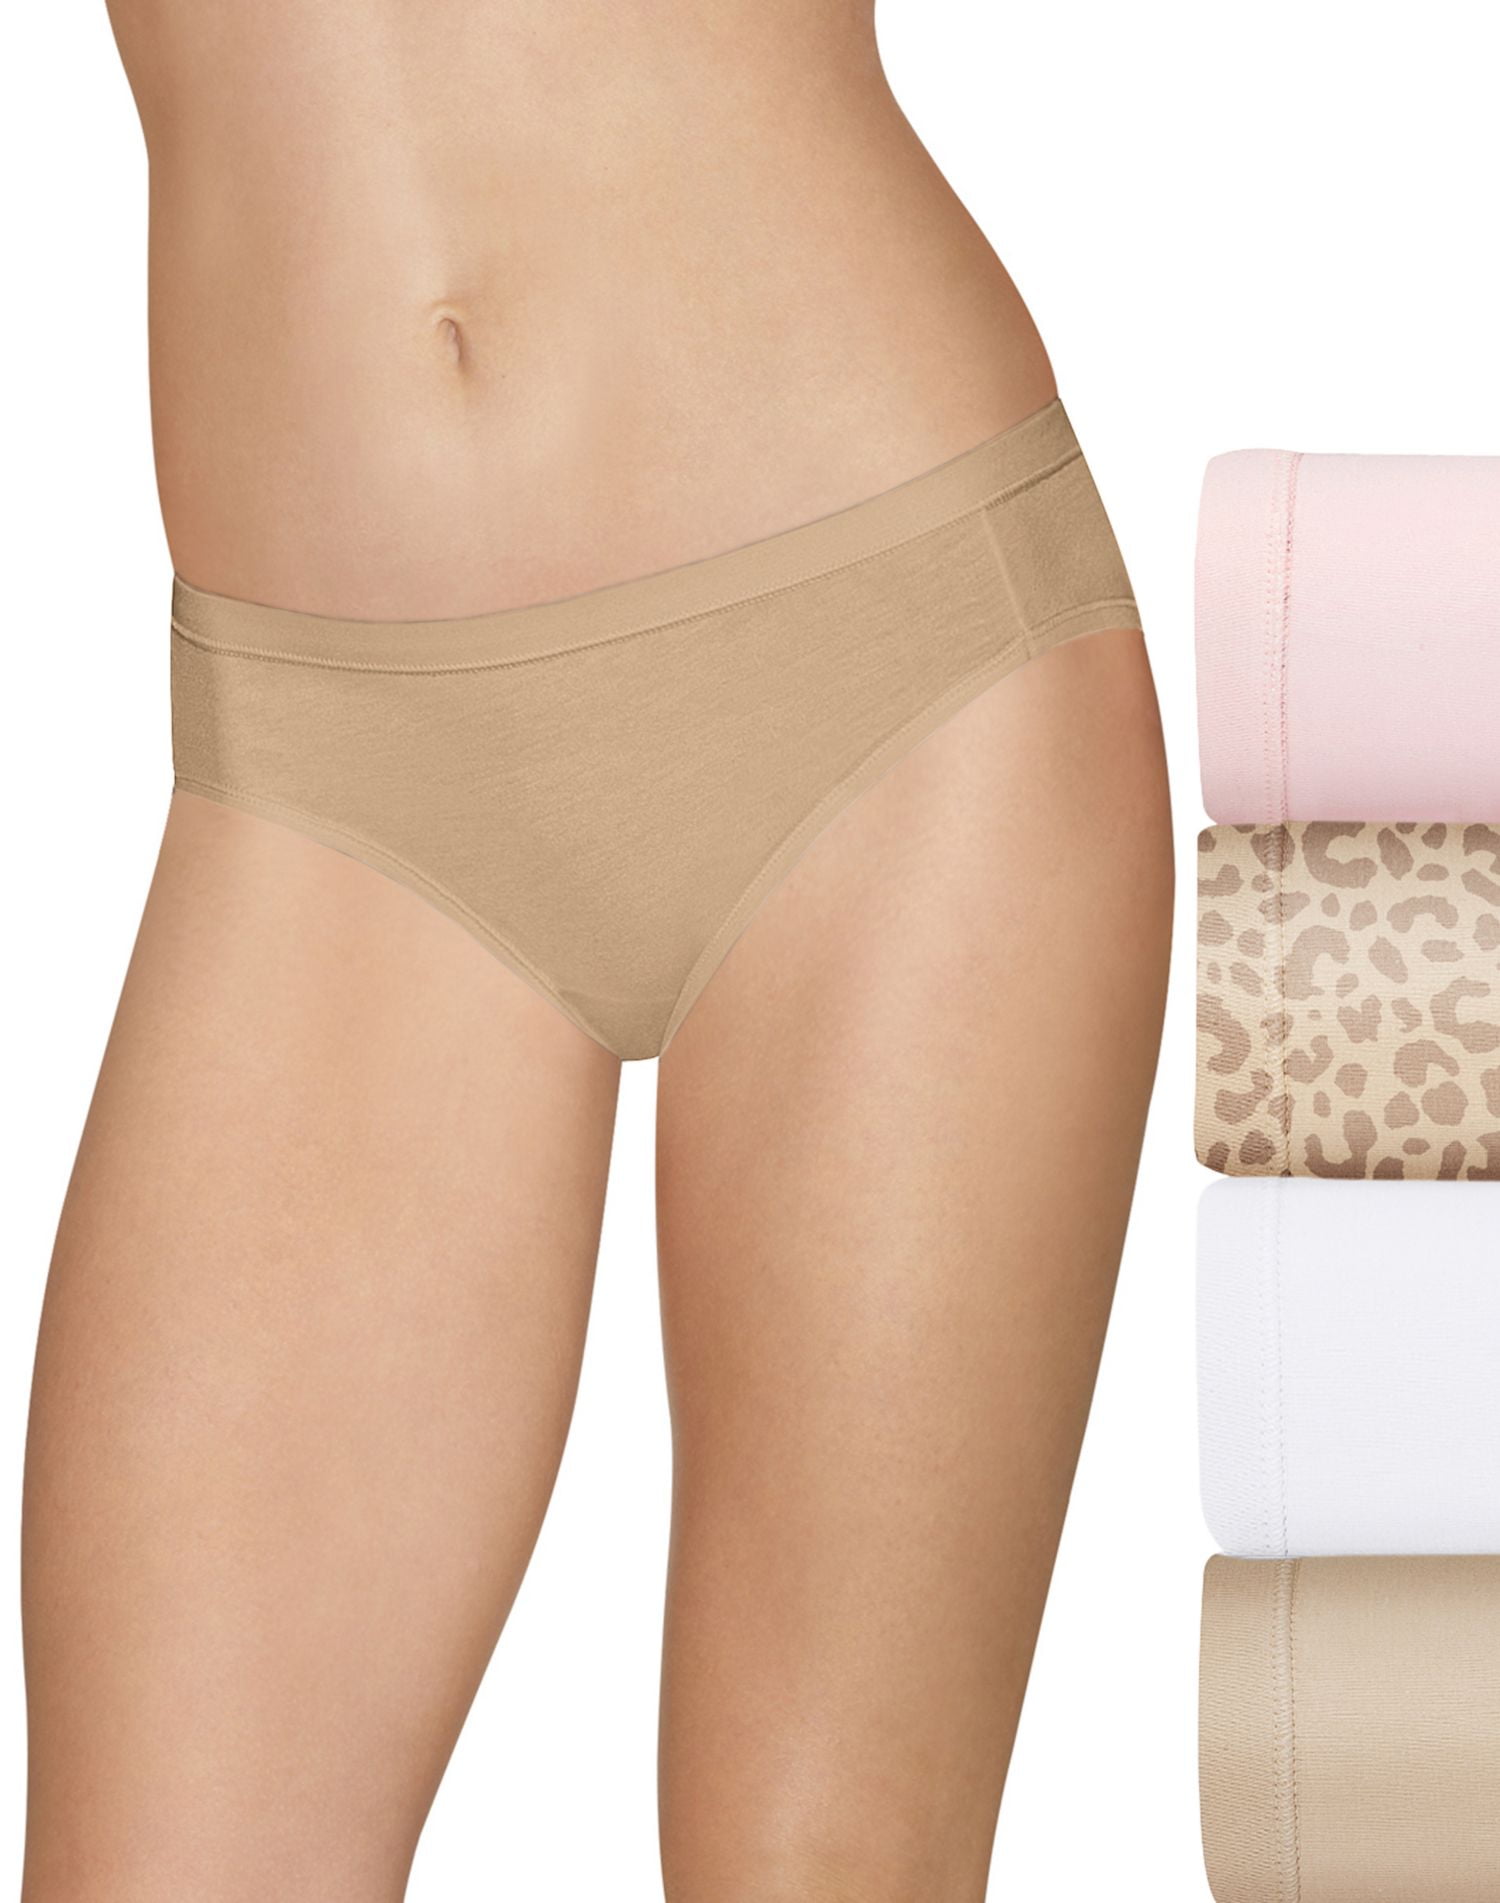 Hanes 4pk Women's Comfortsoft Cotton Stretch Bikini Underwear